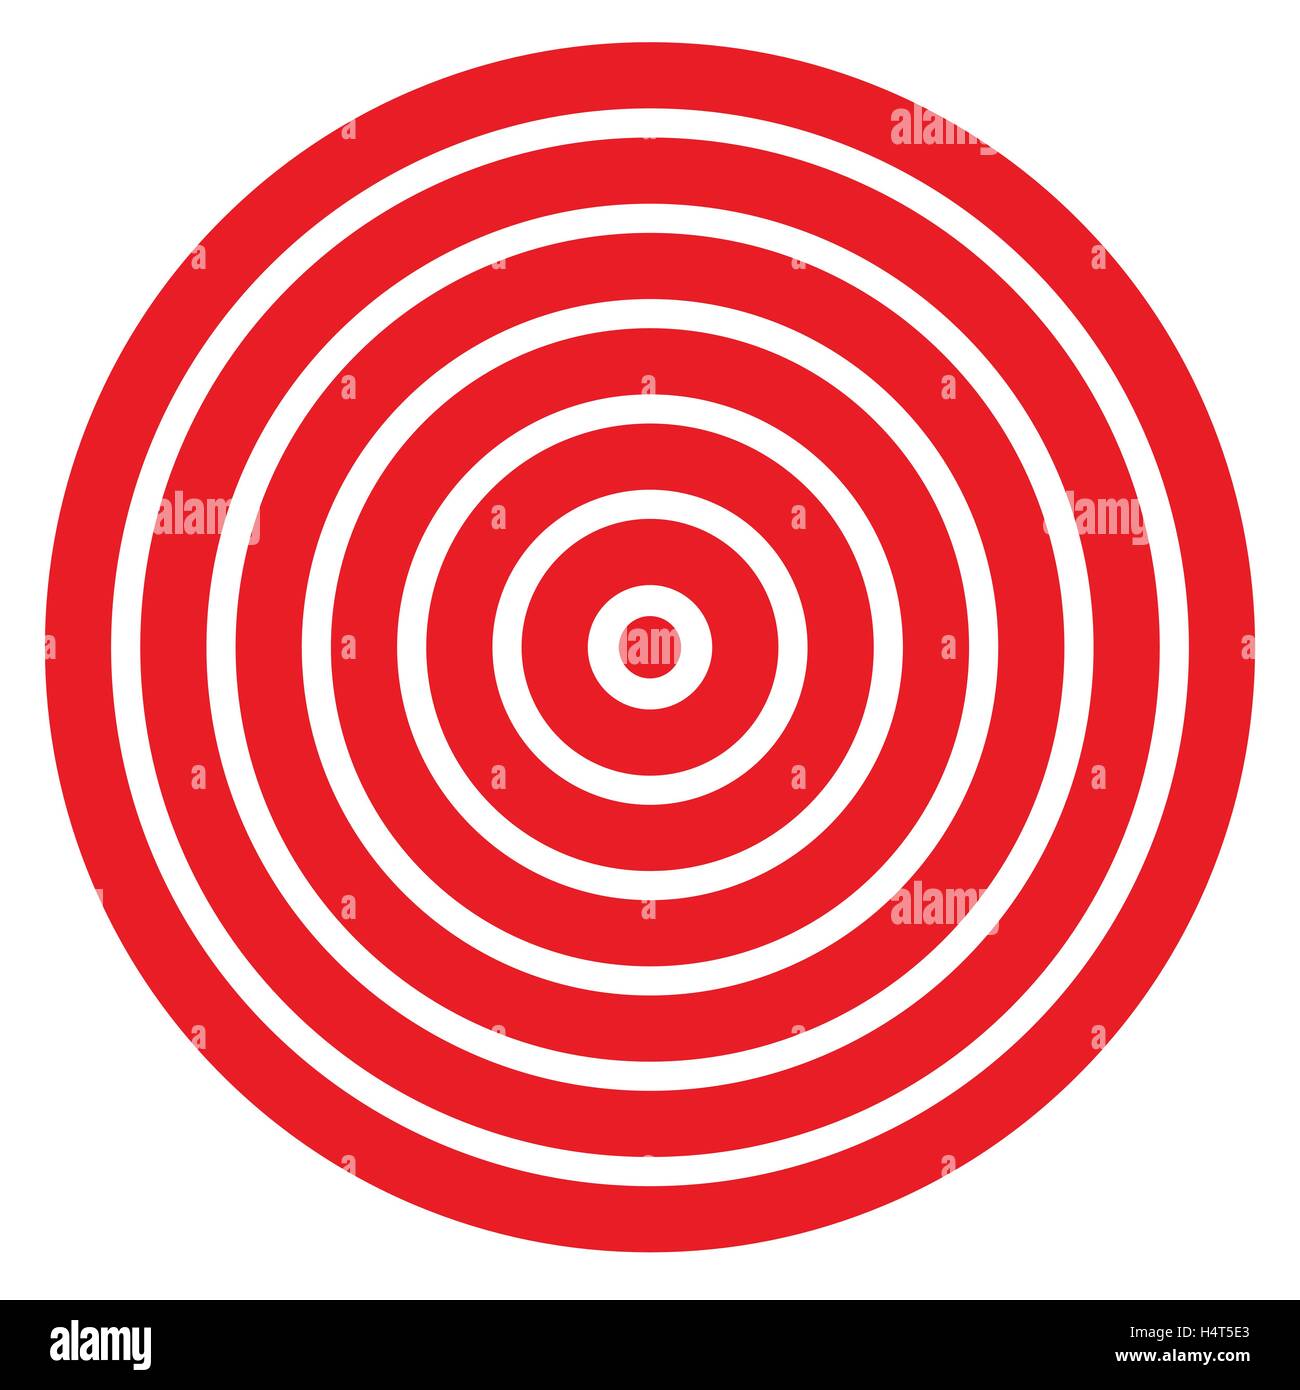 Simple easy to print target mark with bullseye Vector Image & Art - Alamy